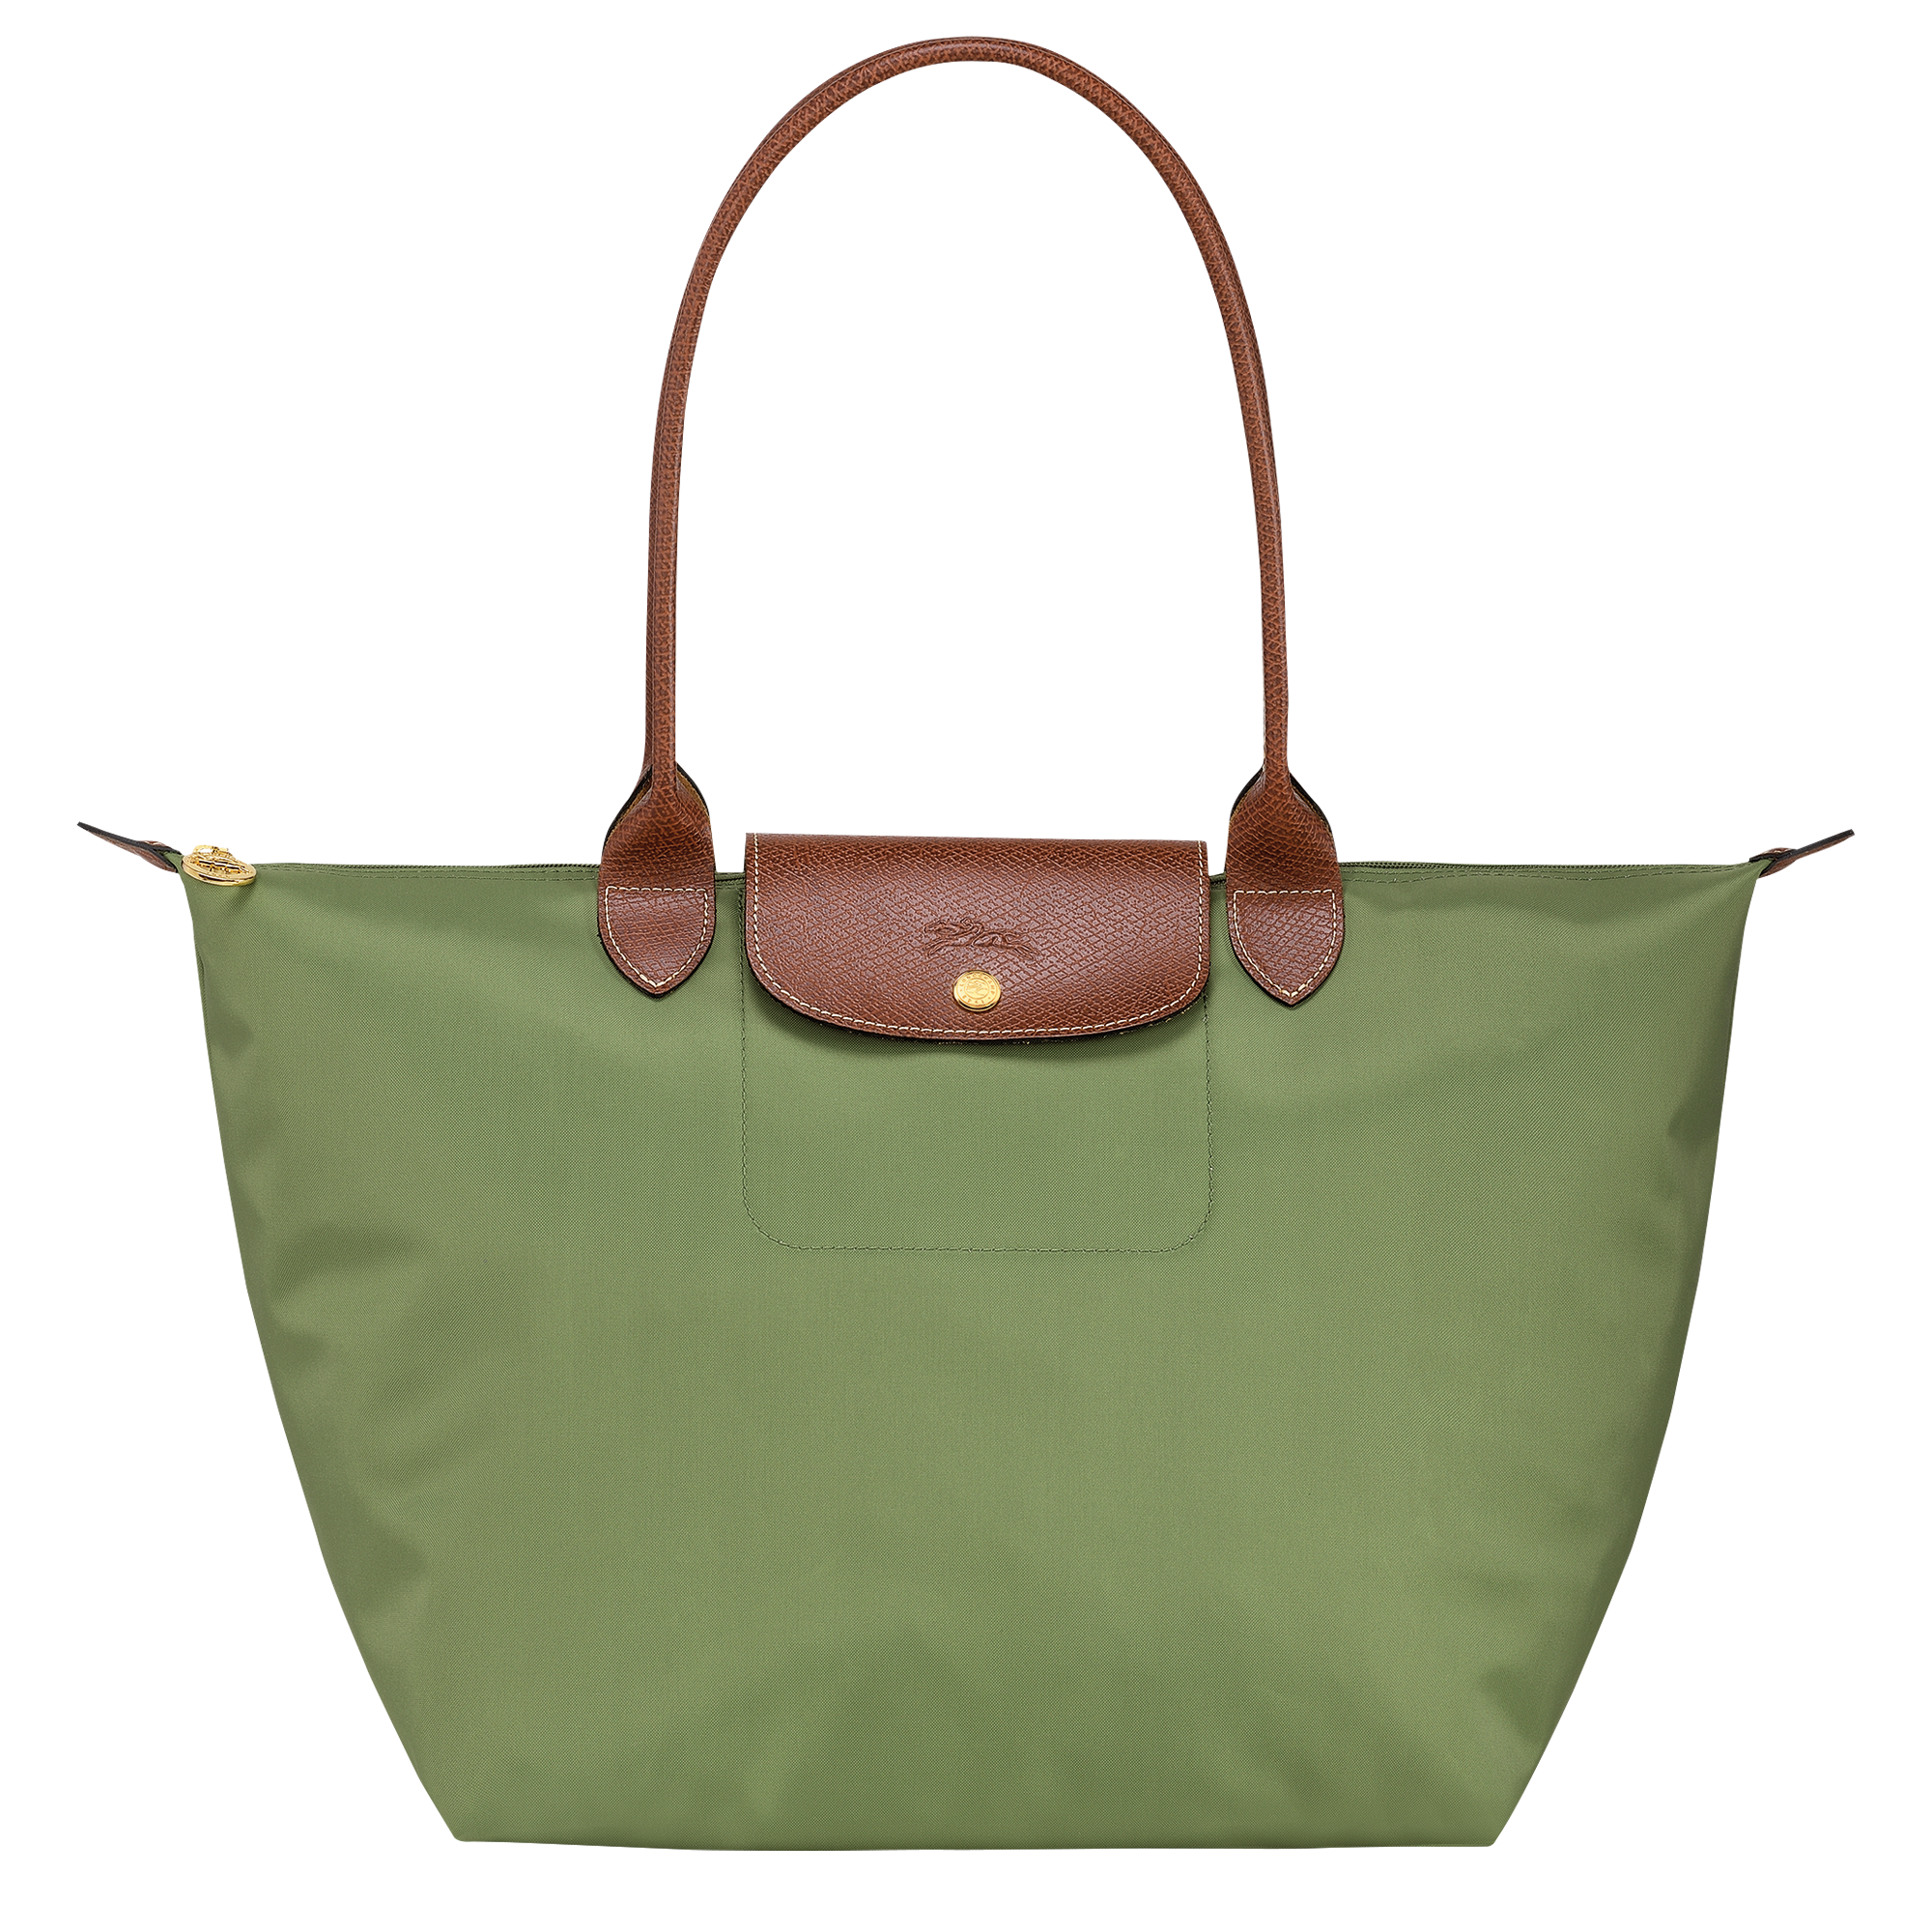 Le Pliage 原創系列 肩揹袋 L, 苔蘚綠色